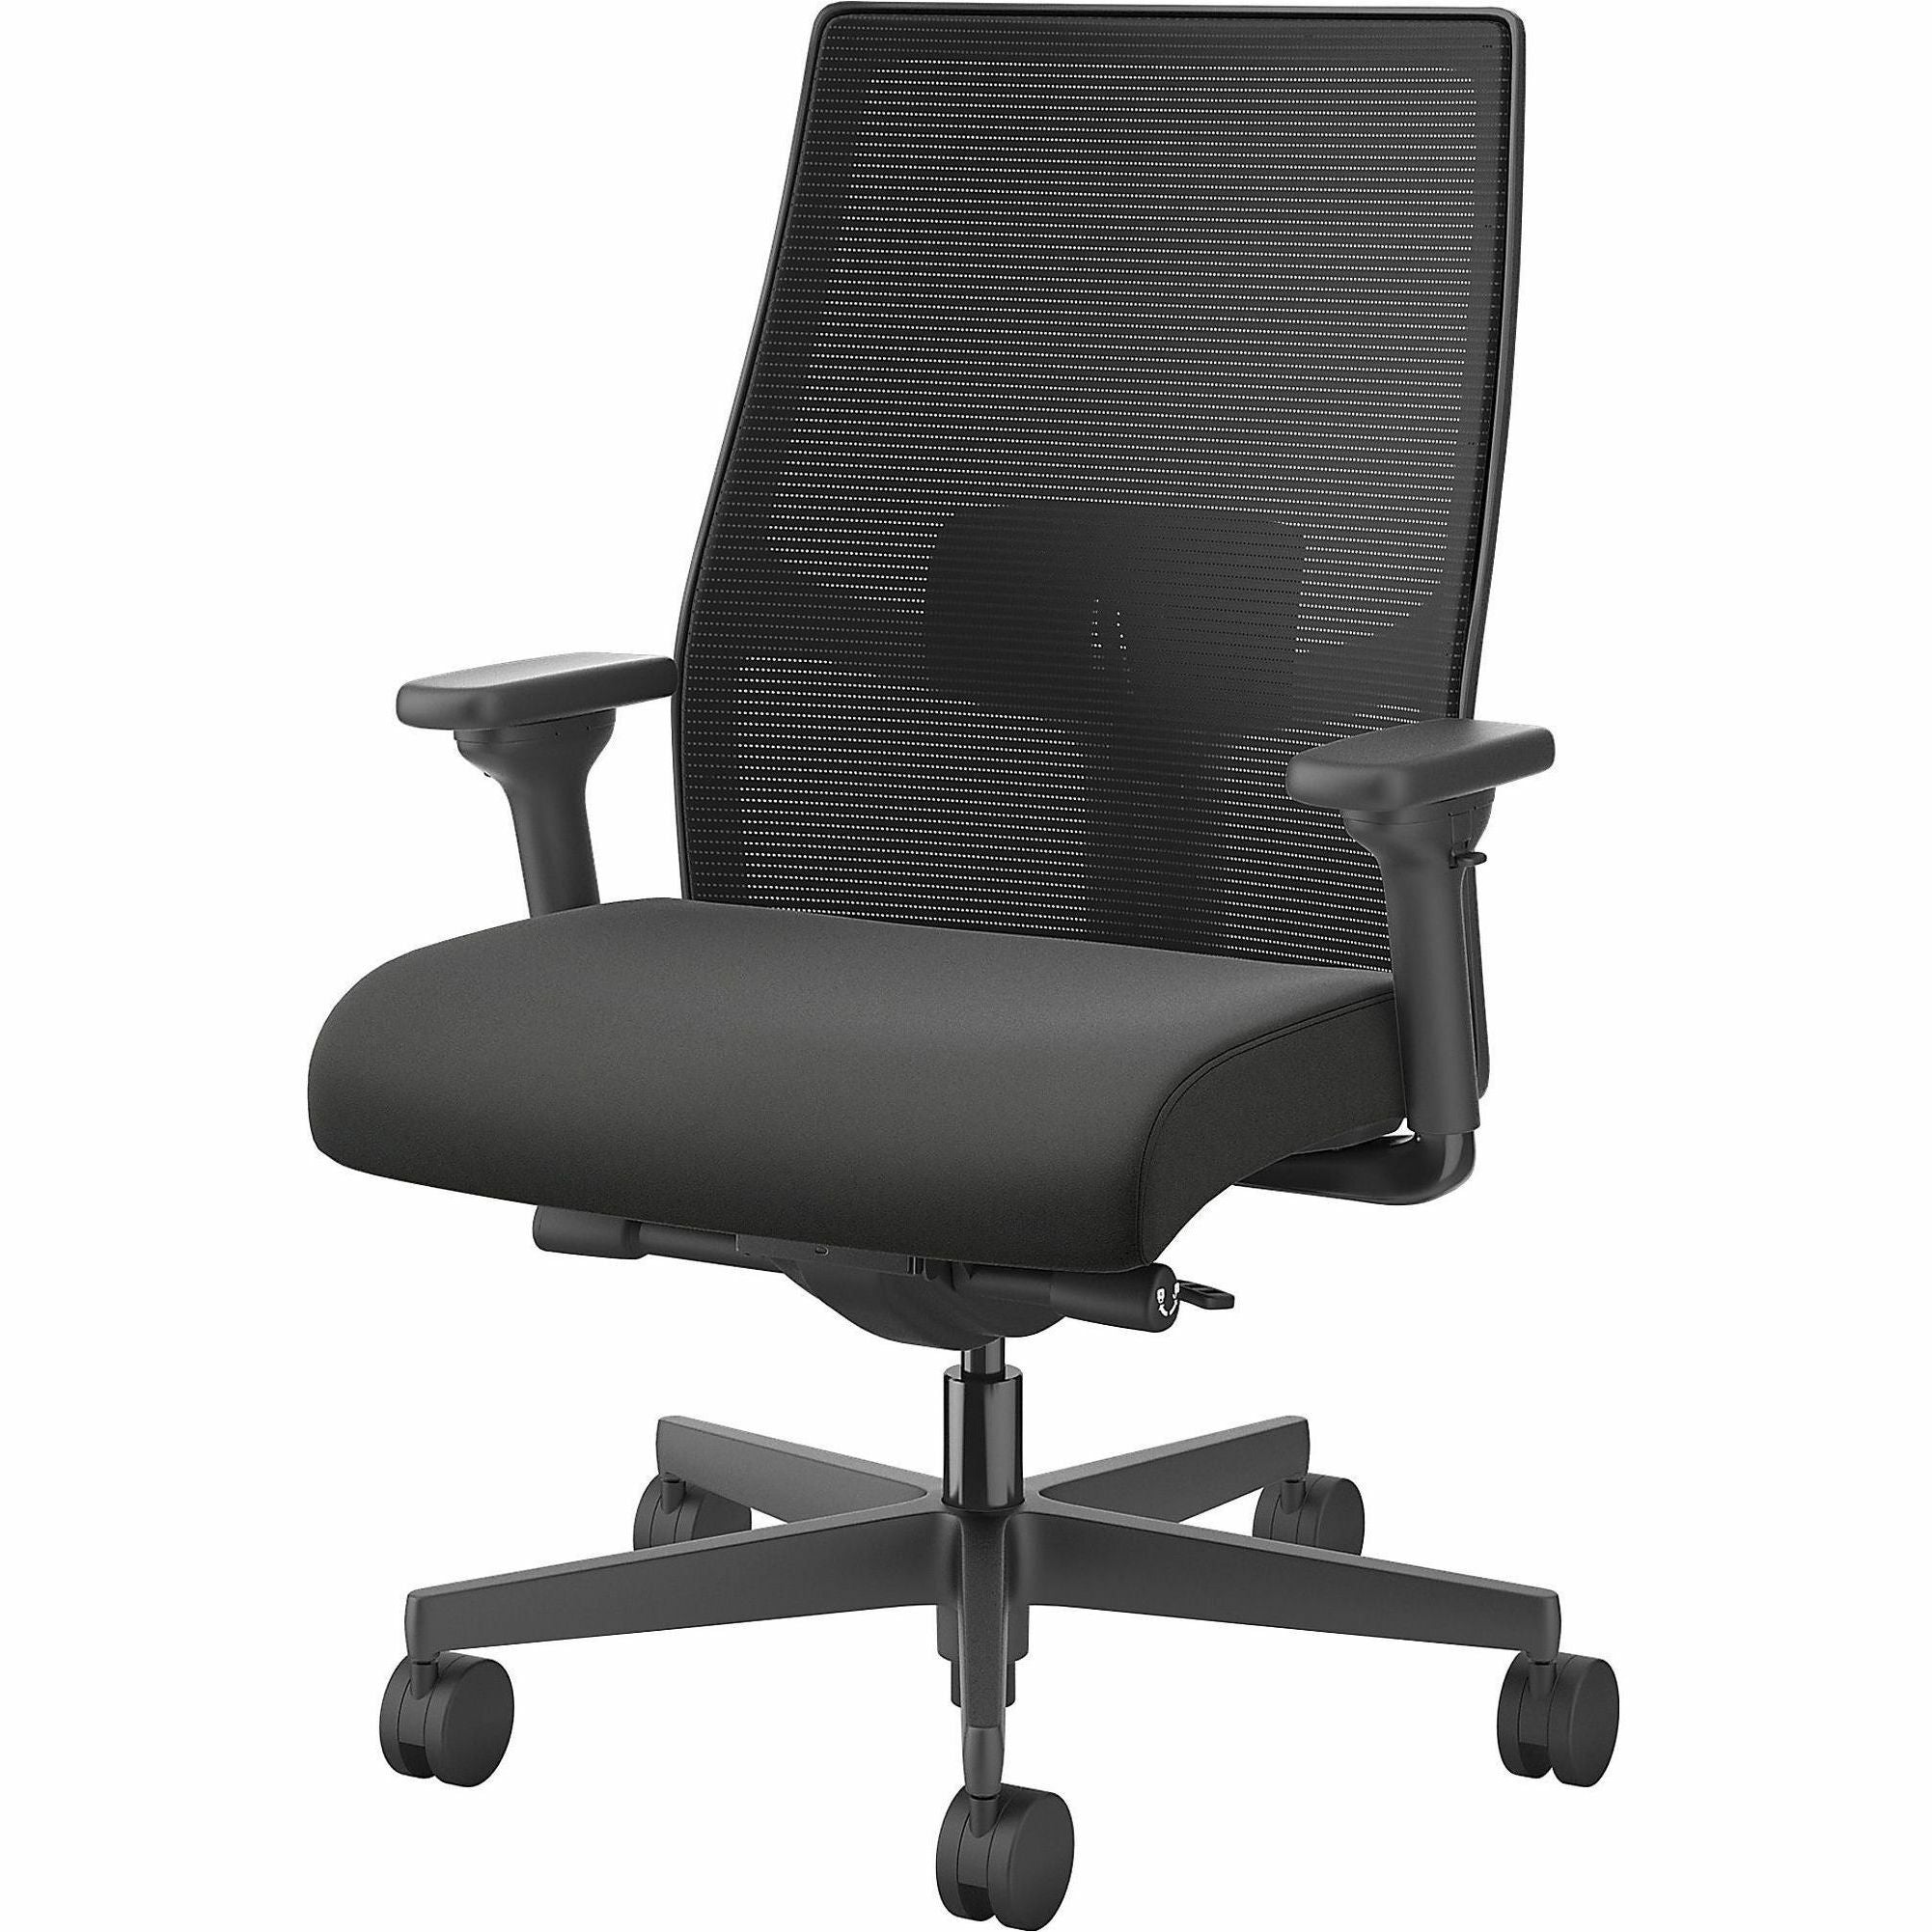 hon-ignition-20-mid-back-big-&-tall-task-chair-black-foam-seat-black-back-black-frame-mid-back-5-star-base-armrest-1-each_honi2btvmu10btn - 3